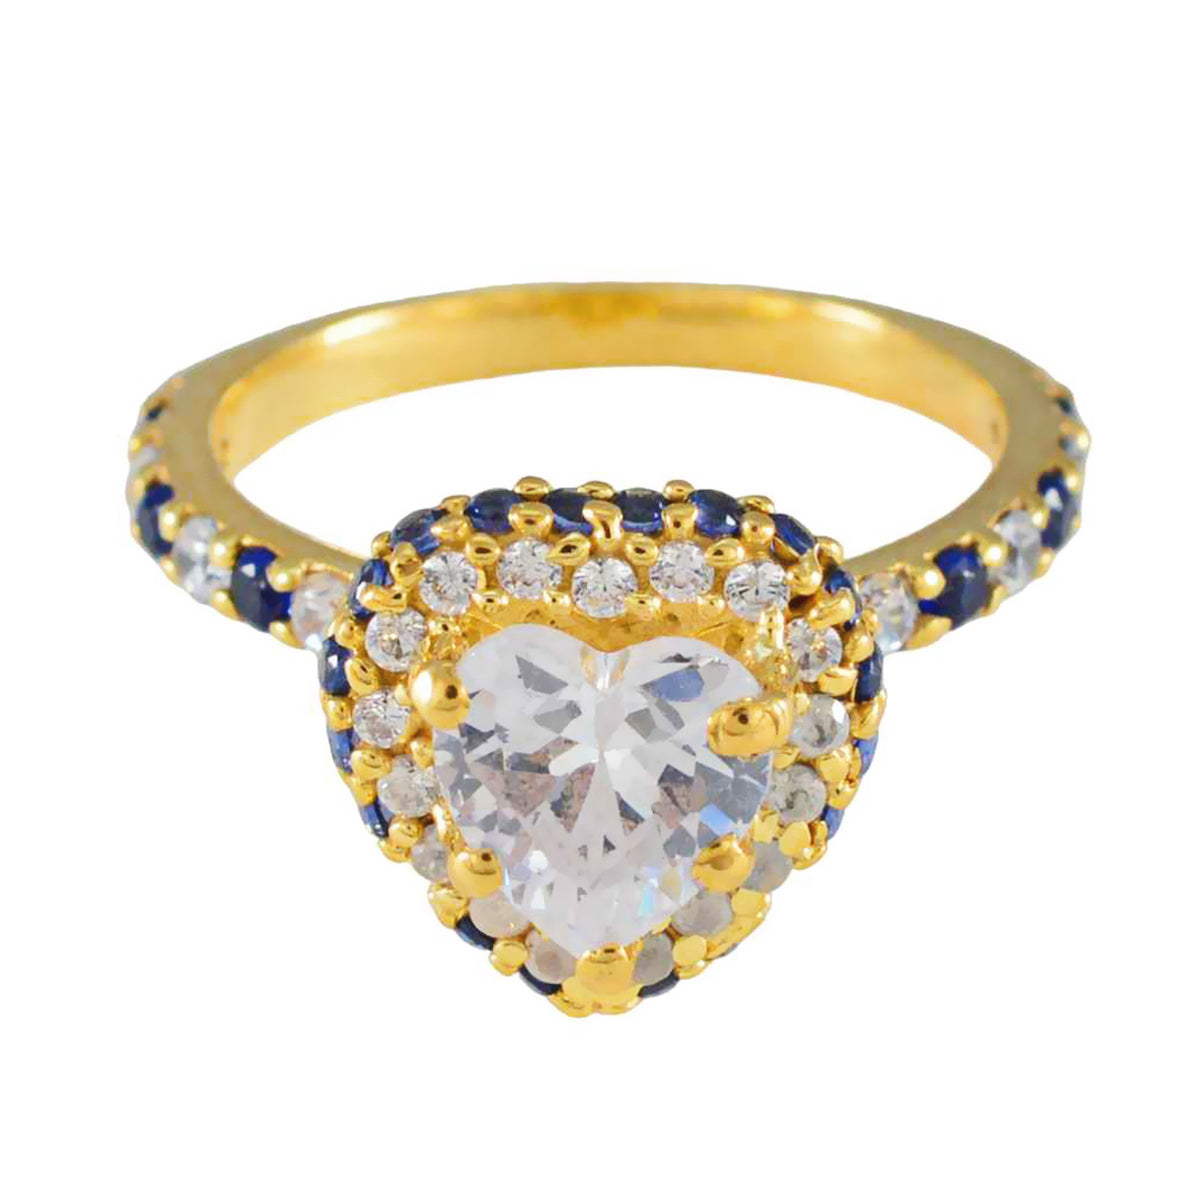 Riyo Mature Silver Ring With Yellow Gold Plating Blue Sapphire CZ Stone Heart Shape Prong Setting Handamde Jewelry Anniversary Ring